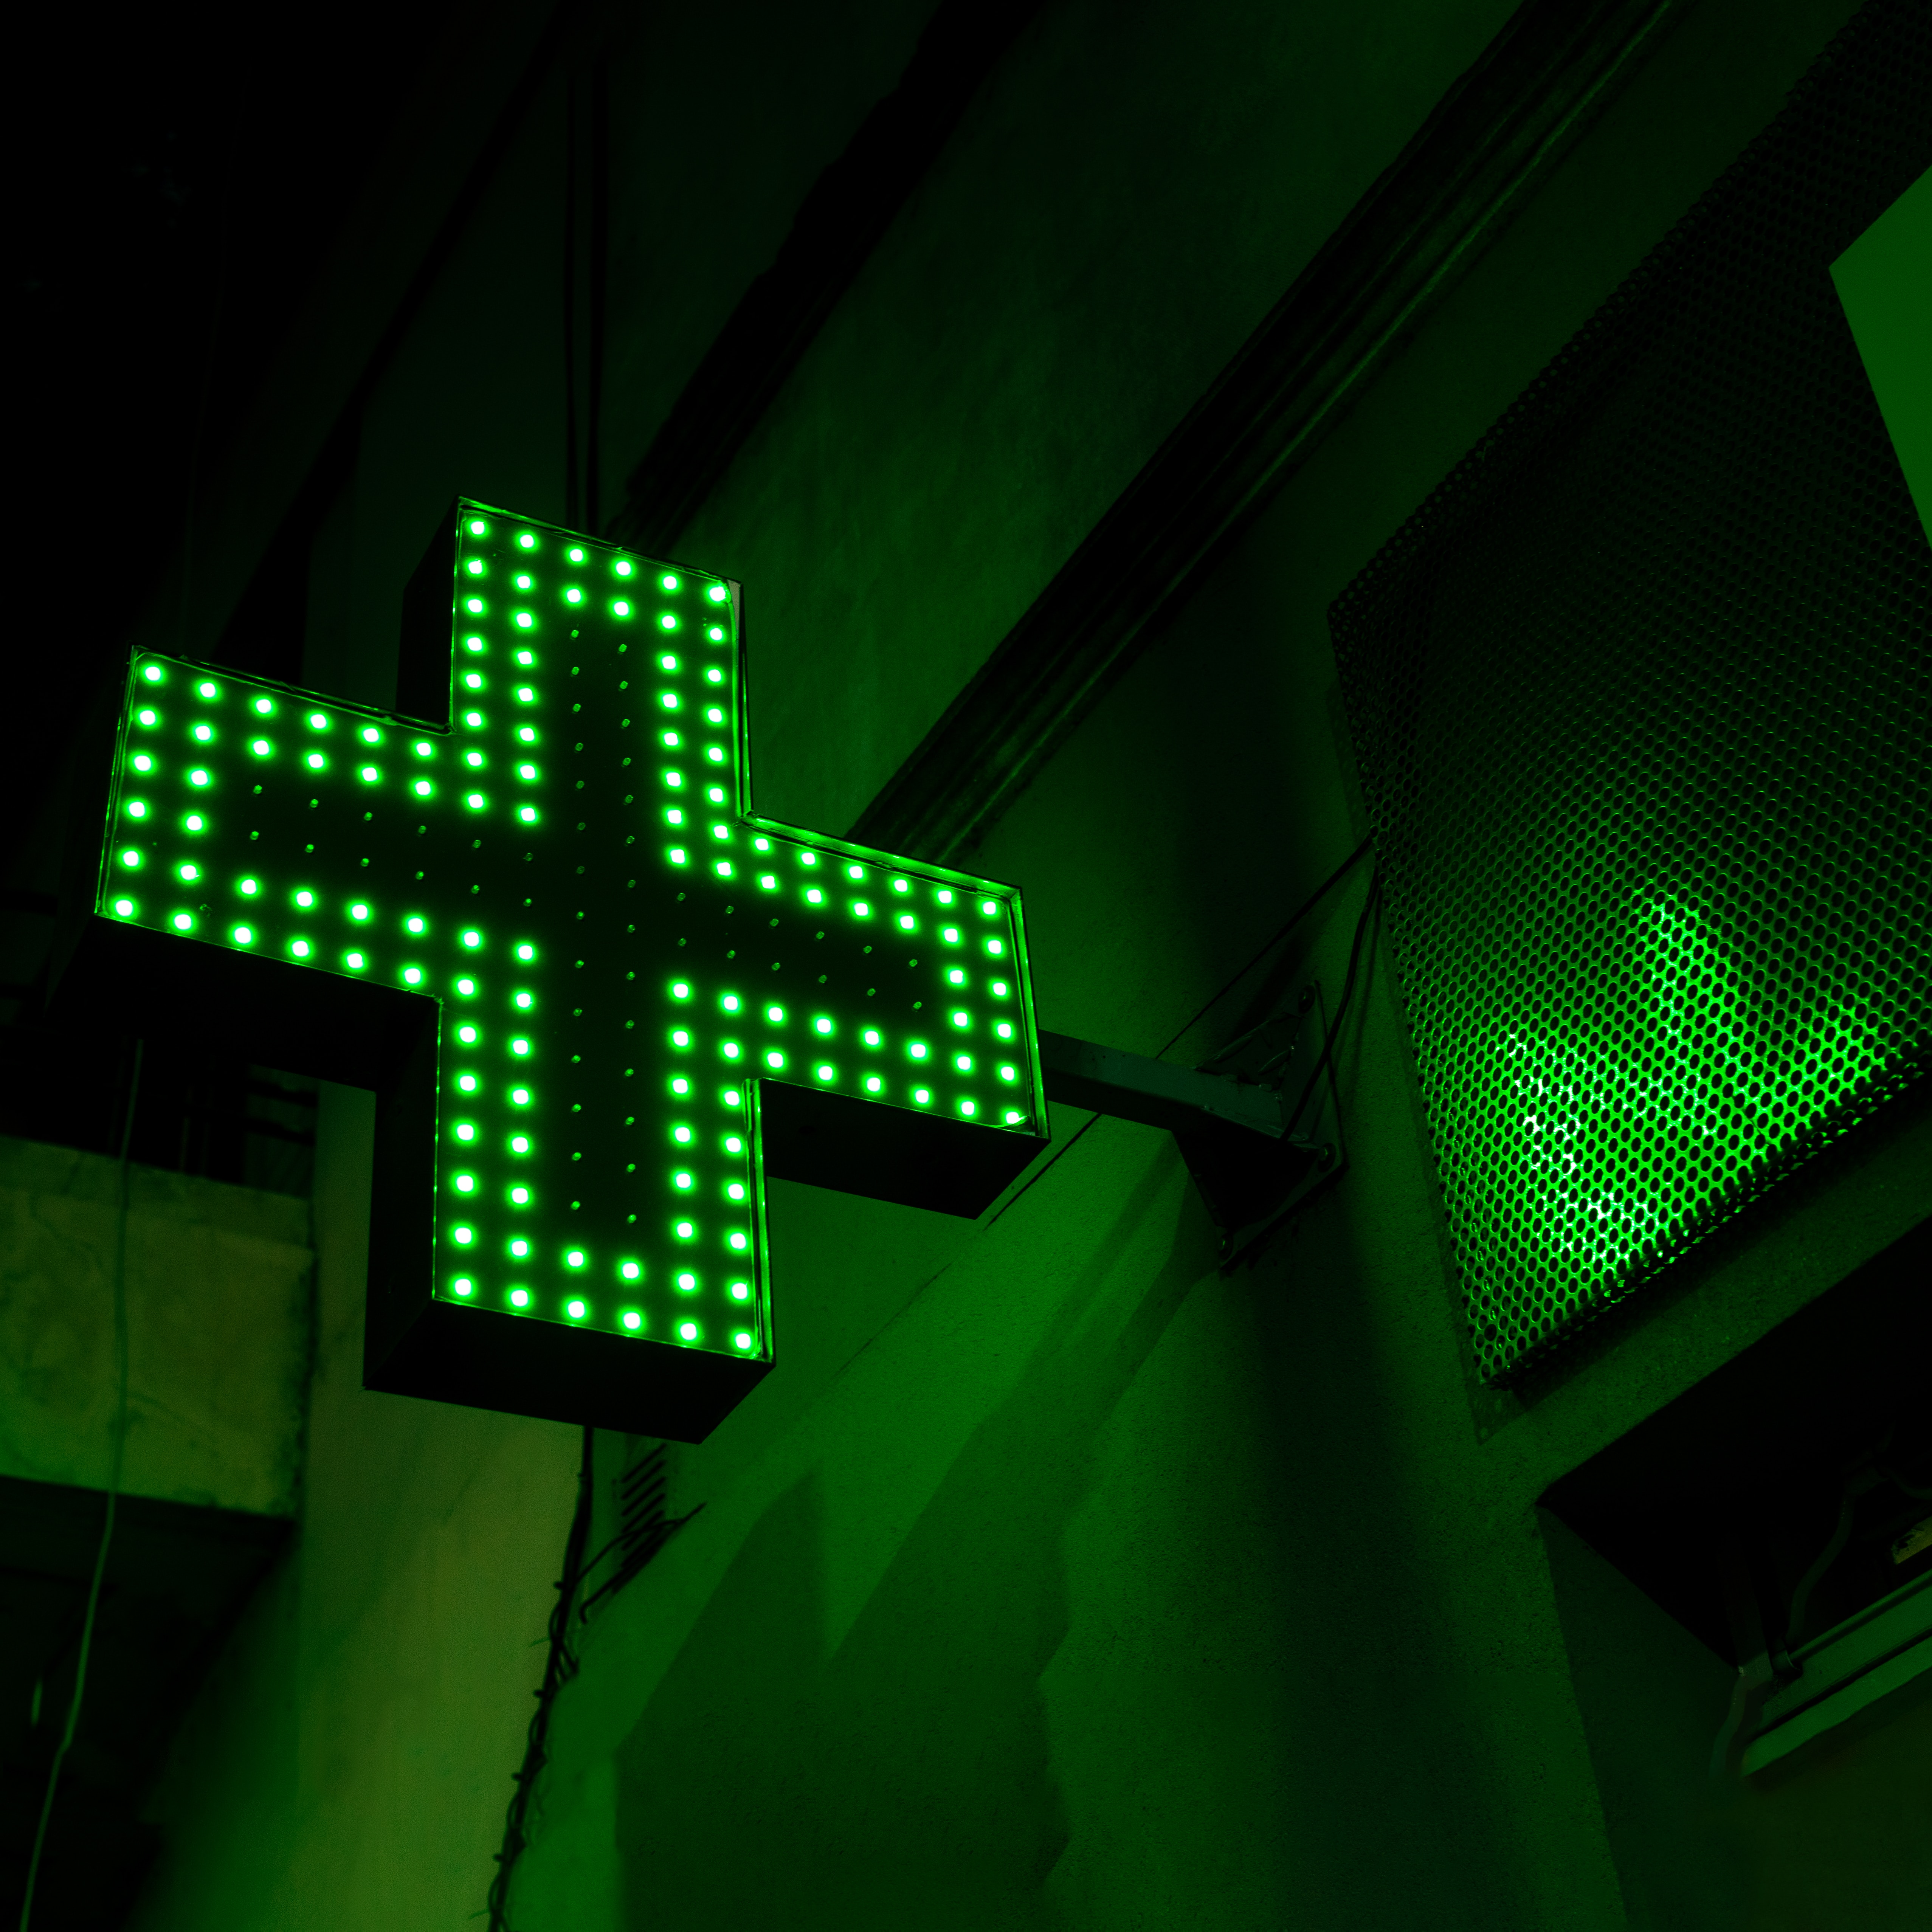 The green cross sign that identifies a farmacia